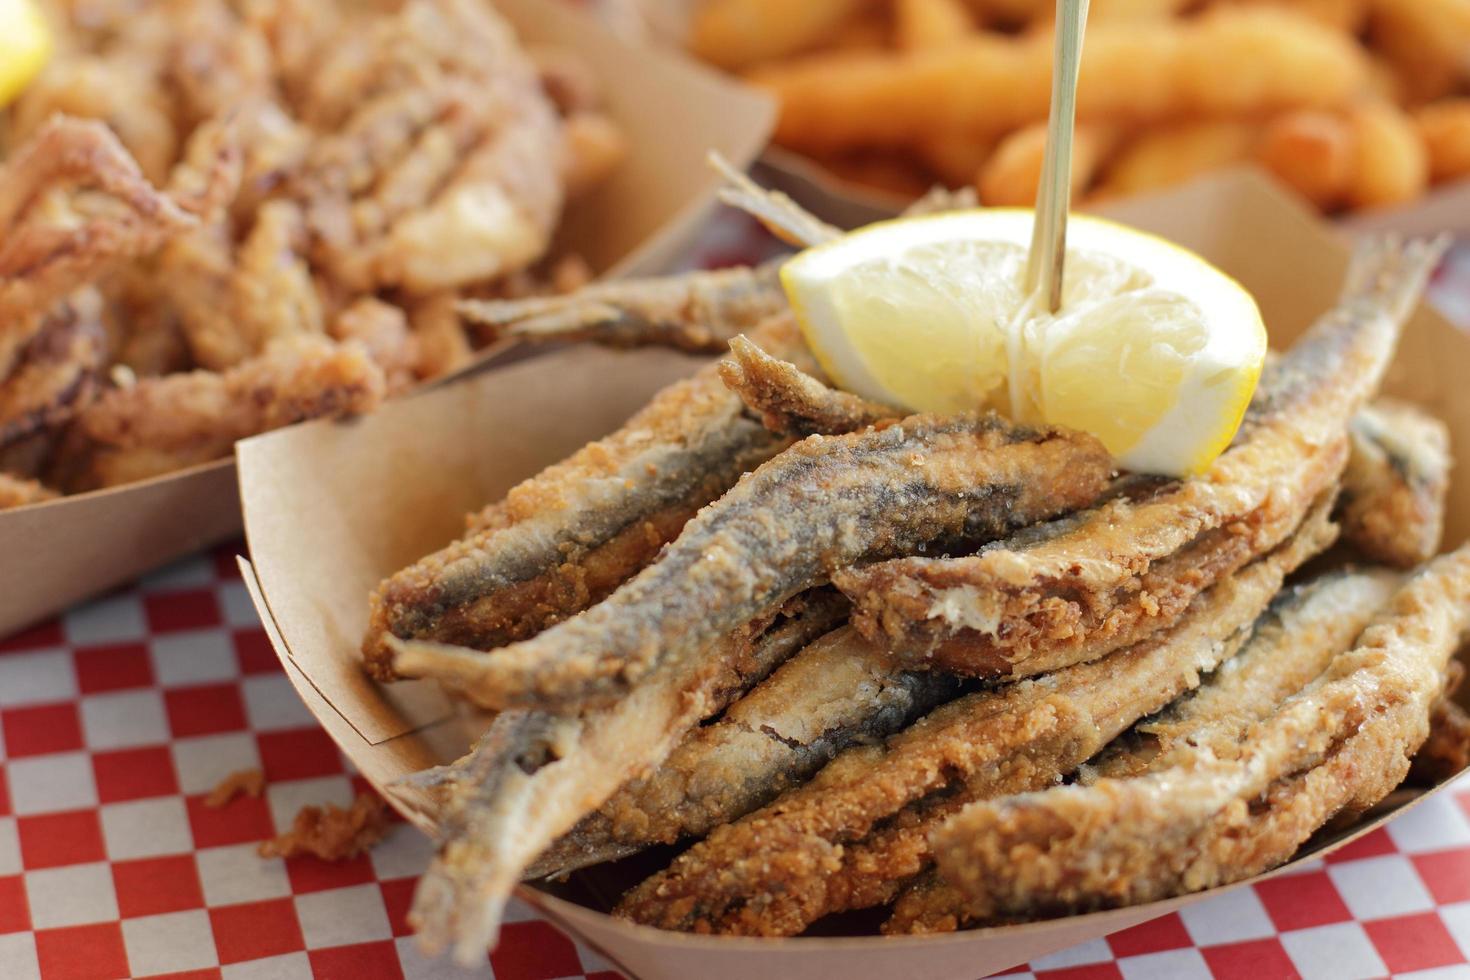 anchovas fritas típicas da espanha pescadito frito foto